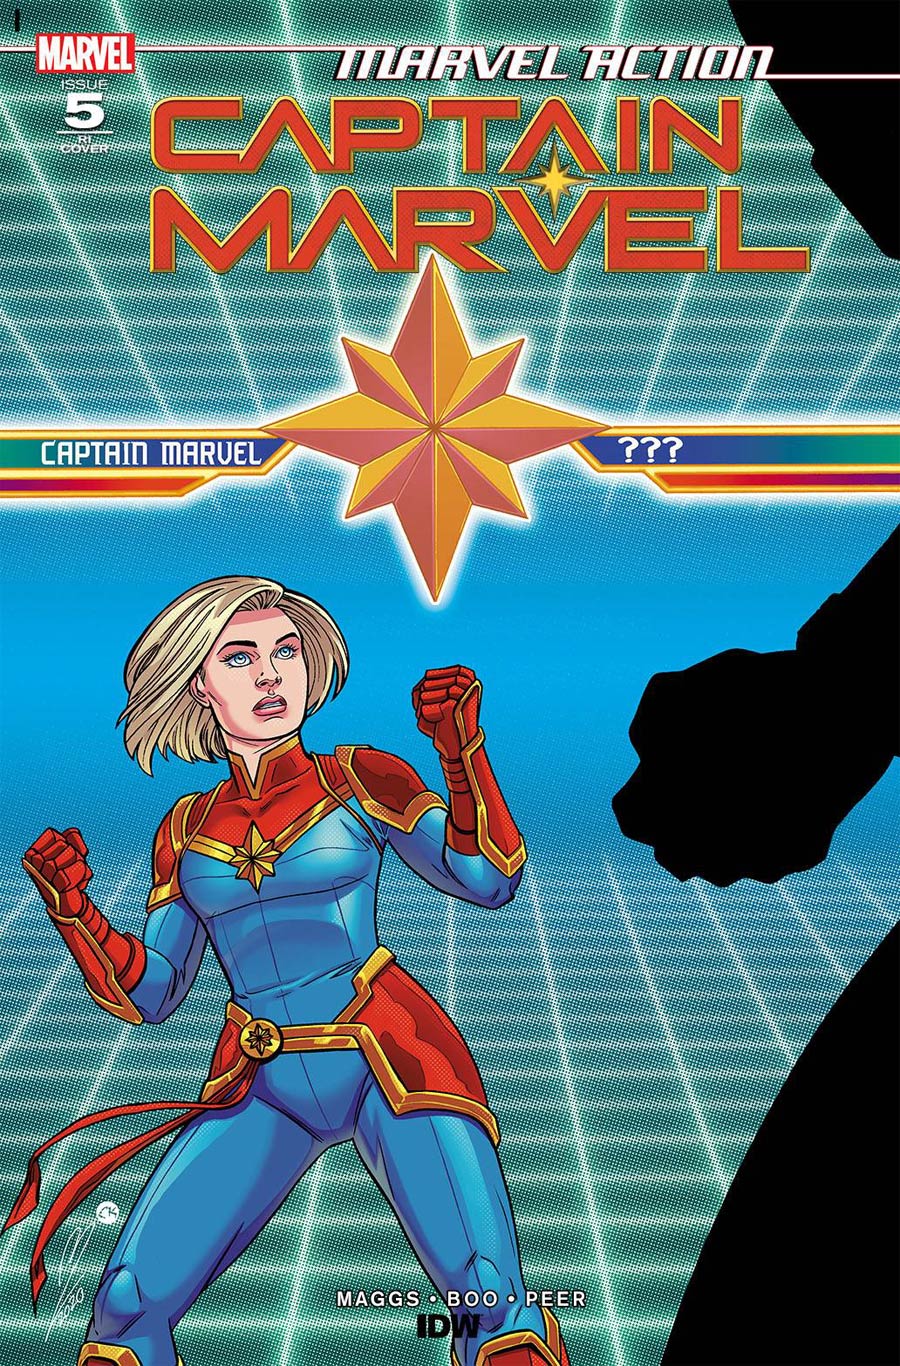 Marvel Action Captain Marvel Vol 2 #5 Cover B Incentive Megan Levens Variant Cover